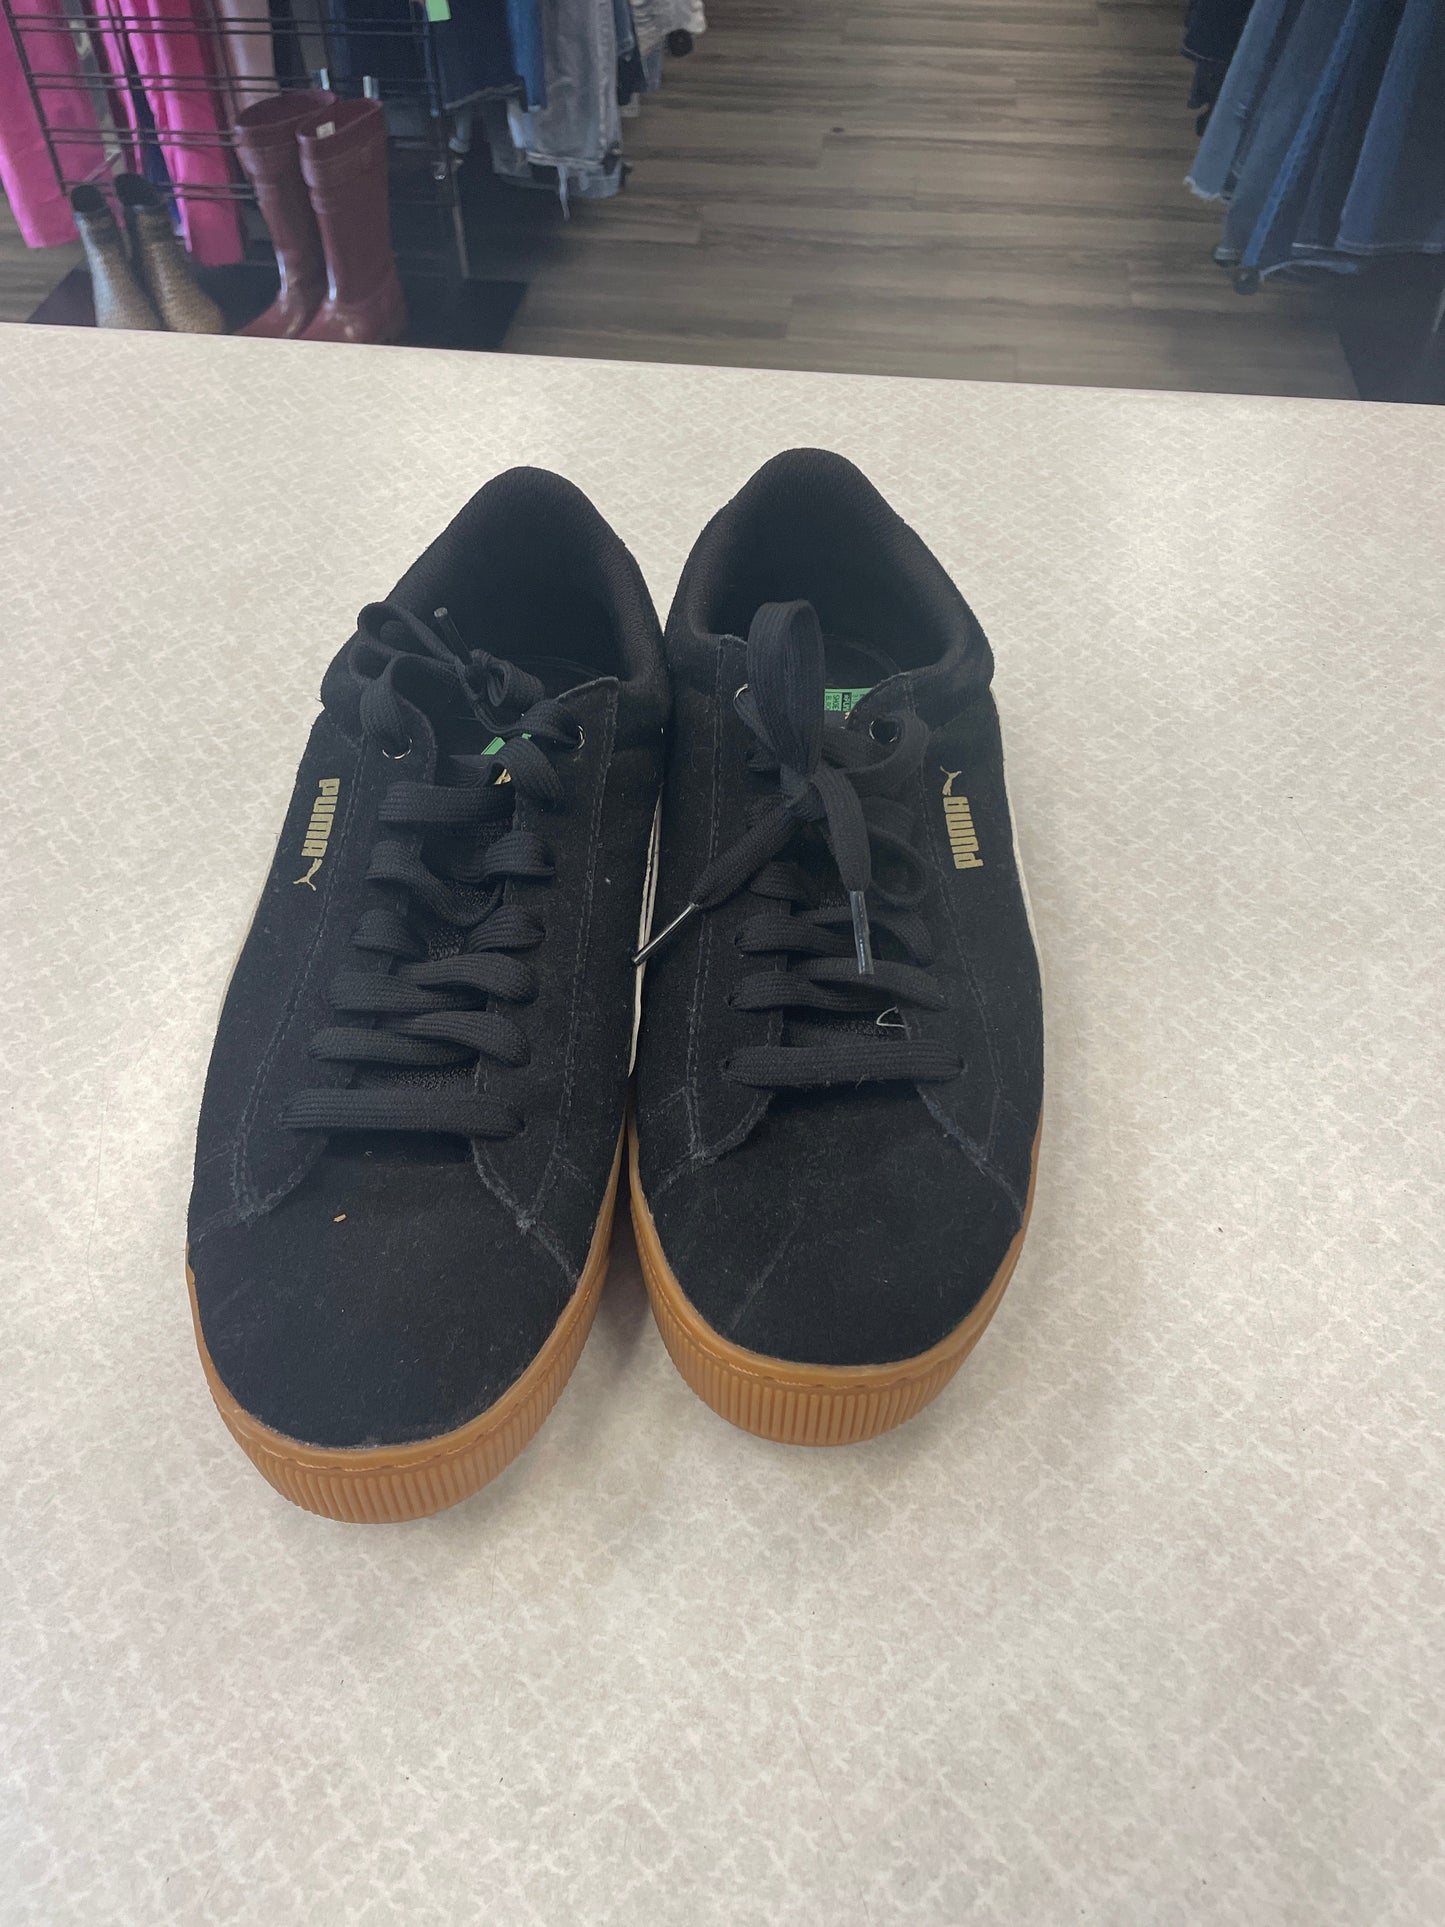 Black Shoes Athletic Puma, Size 10